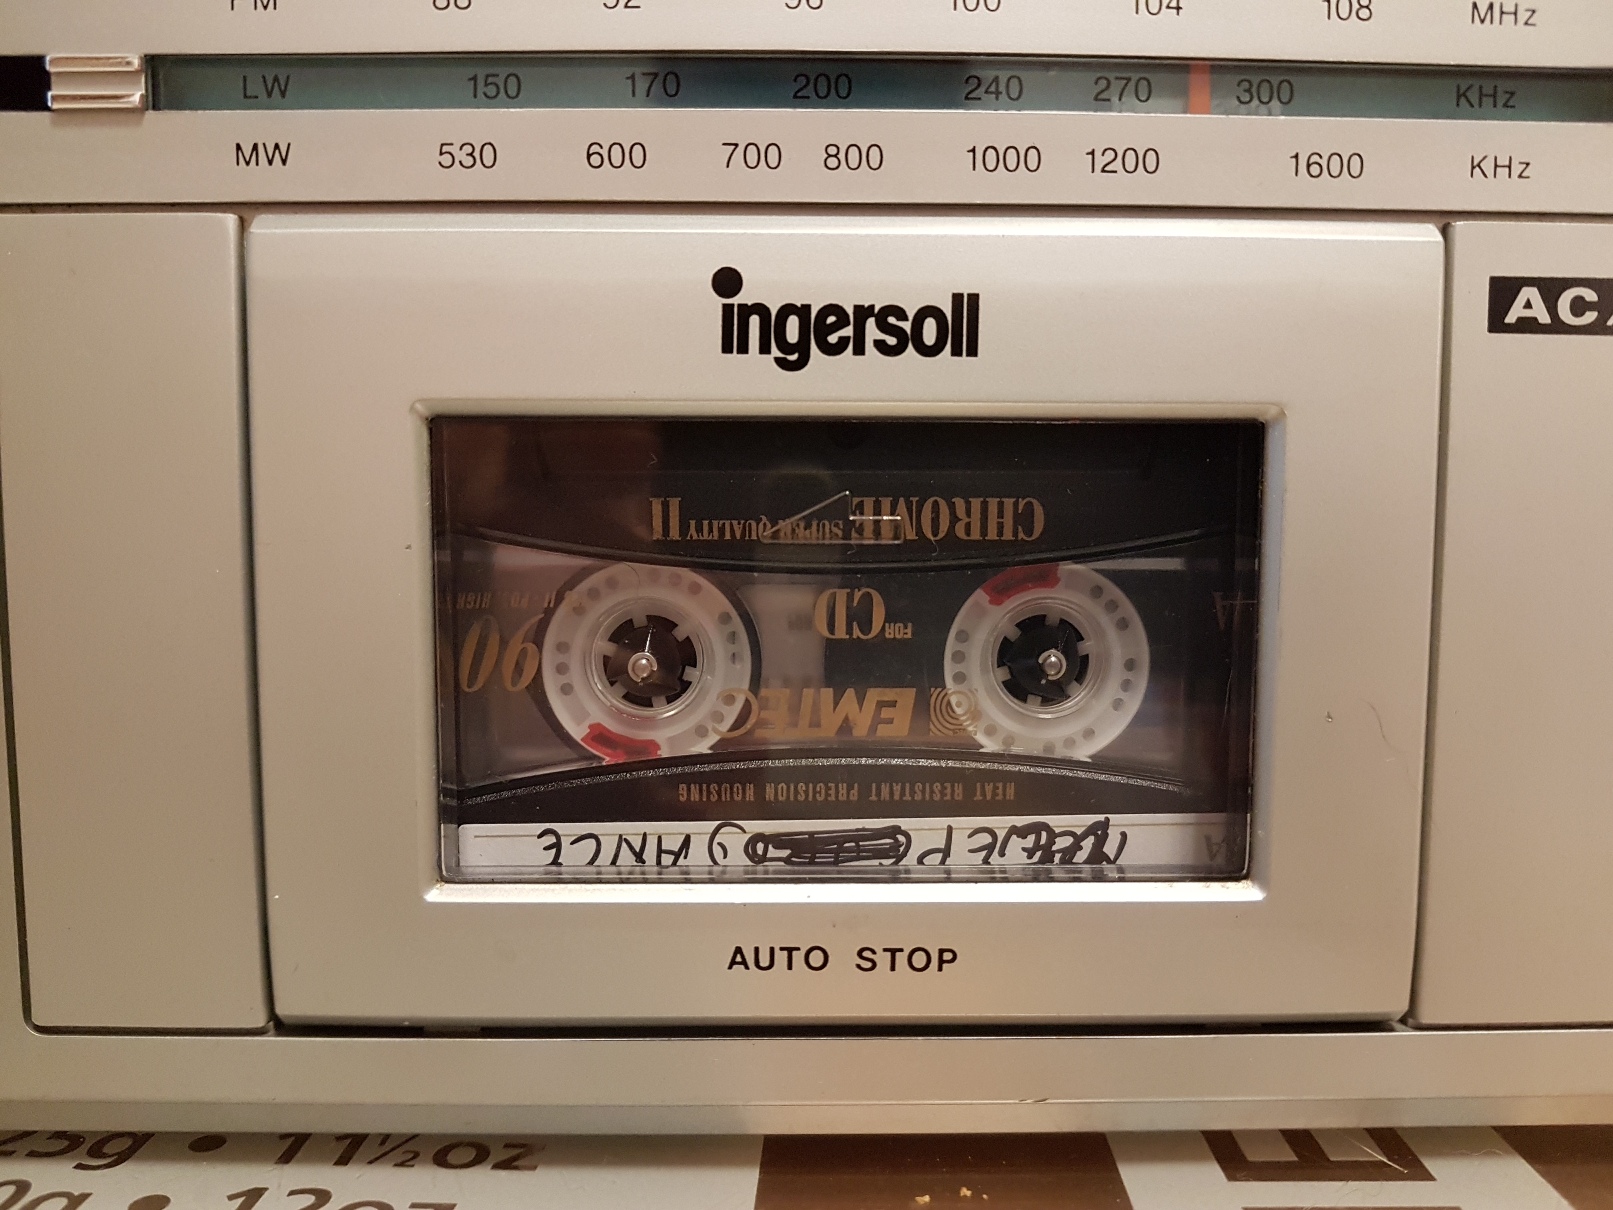 Ingersoll XK-808 Stereo Radio Recorder - August 2017 (7).jpg